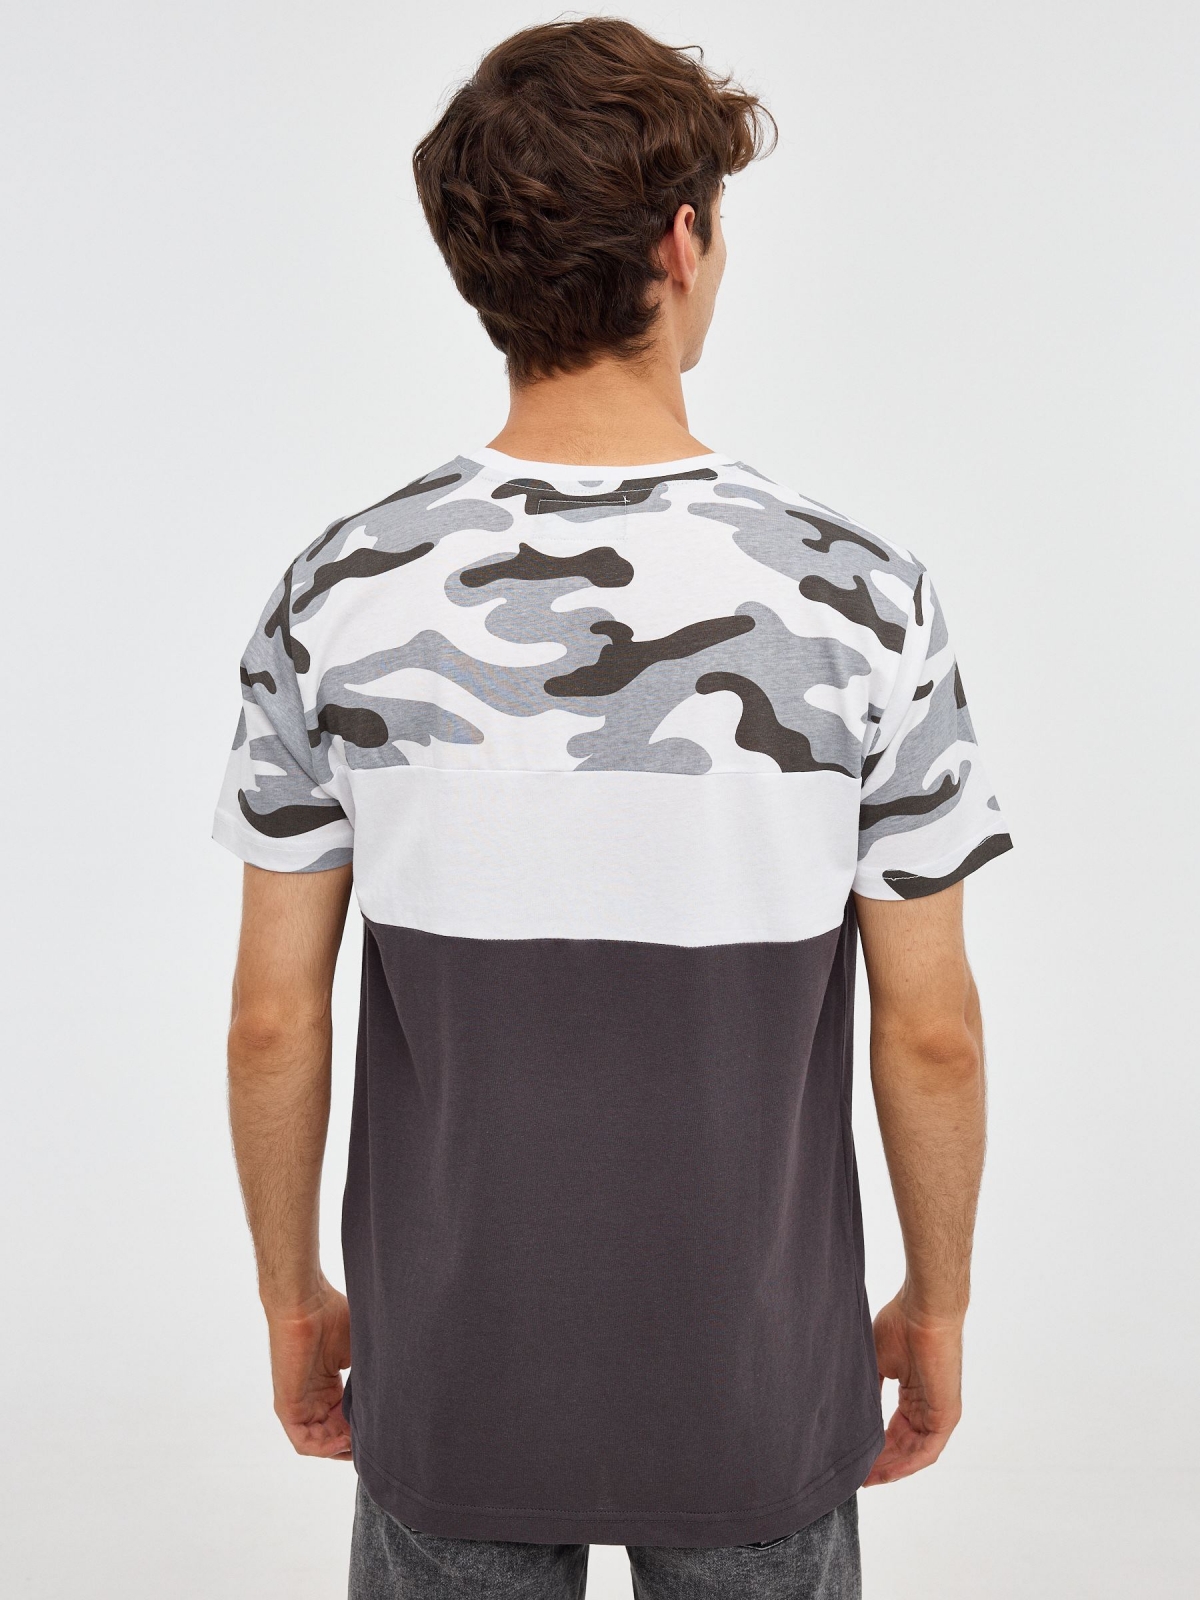 Multi-print T-shirt dark grey middle back view